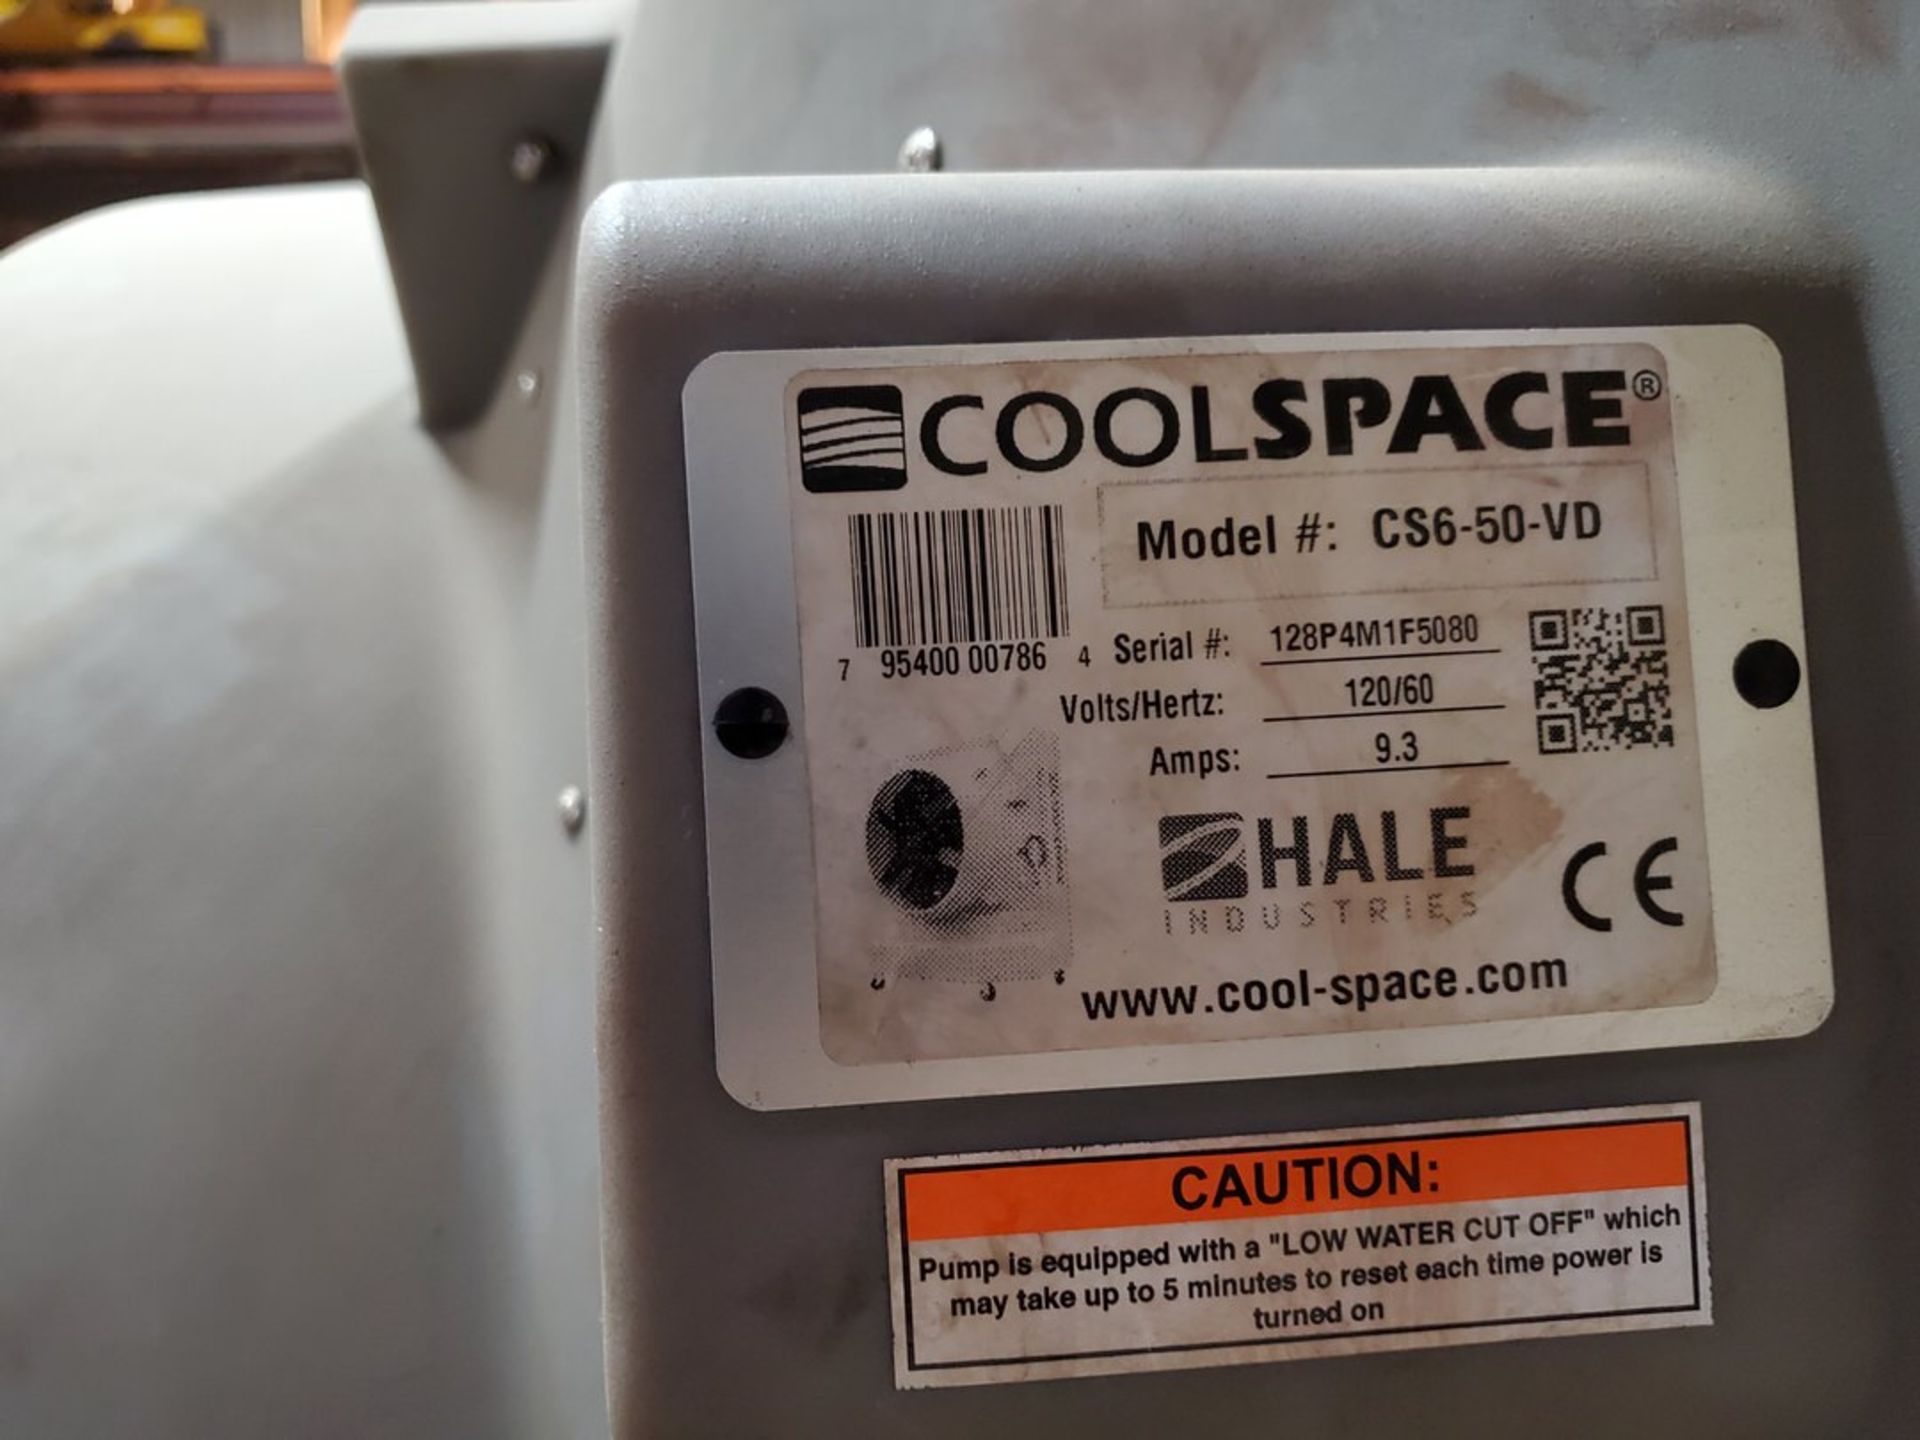 Cool Space CS6-50-VD Evaporative Cooler 120V, 60HZ, 9.3A - Image 6 of 6